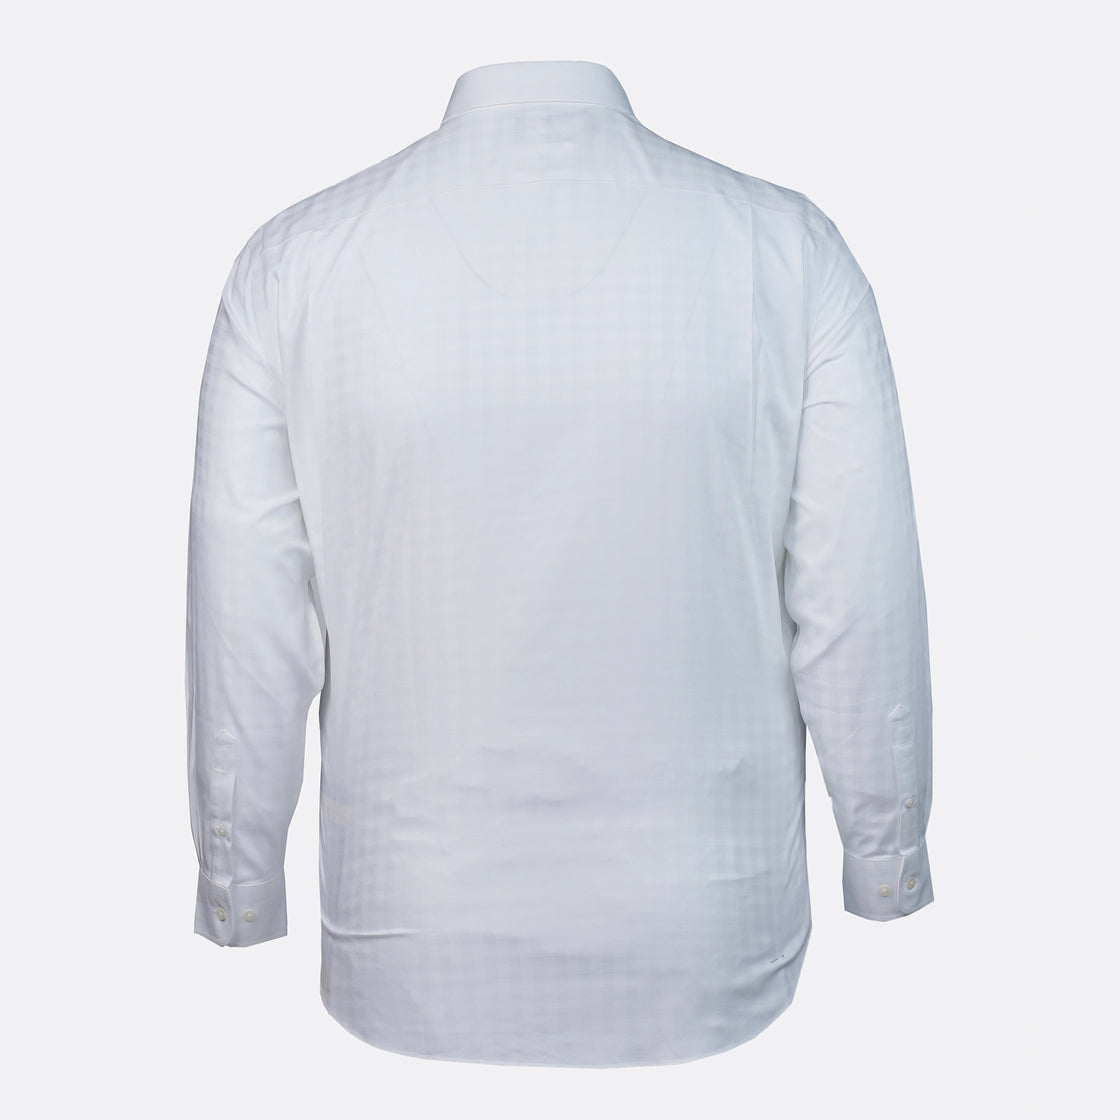 Checkered Pattern Enro Cotton Shirt White Back